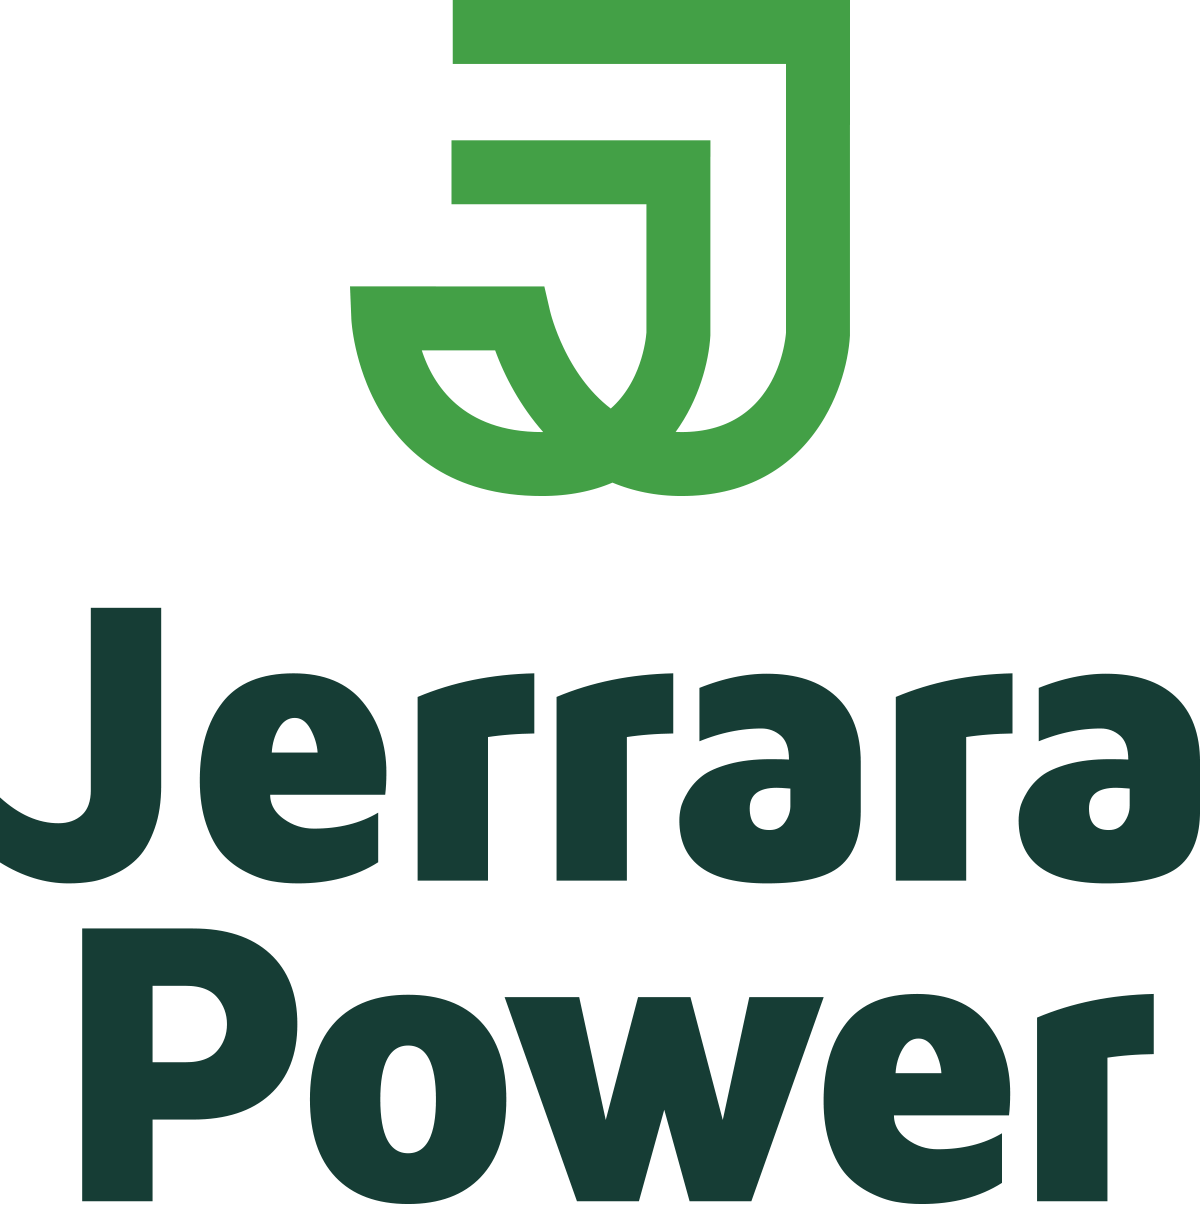 Logo for Jerrara Power